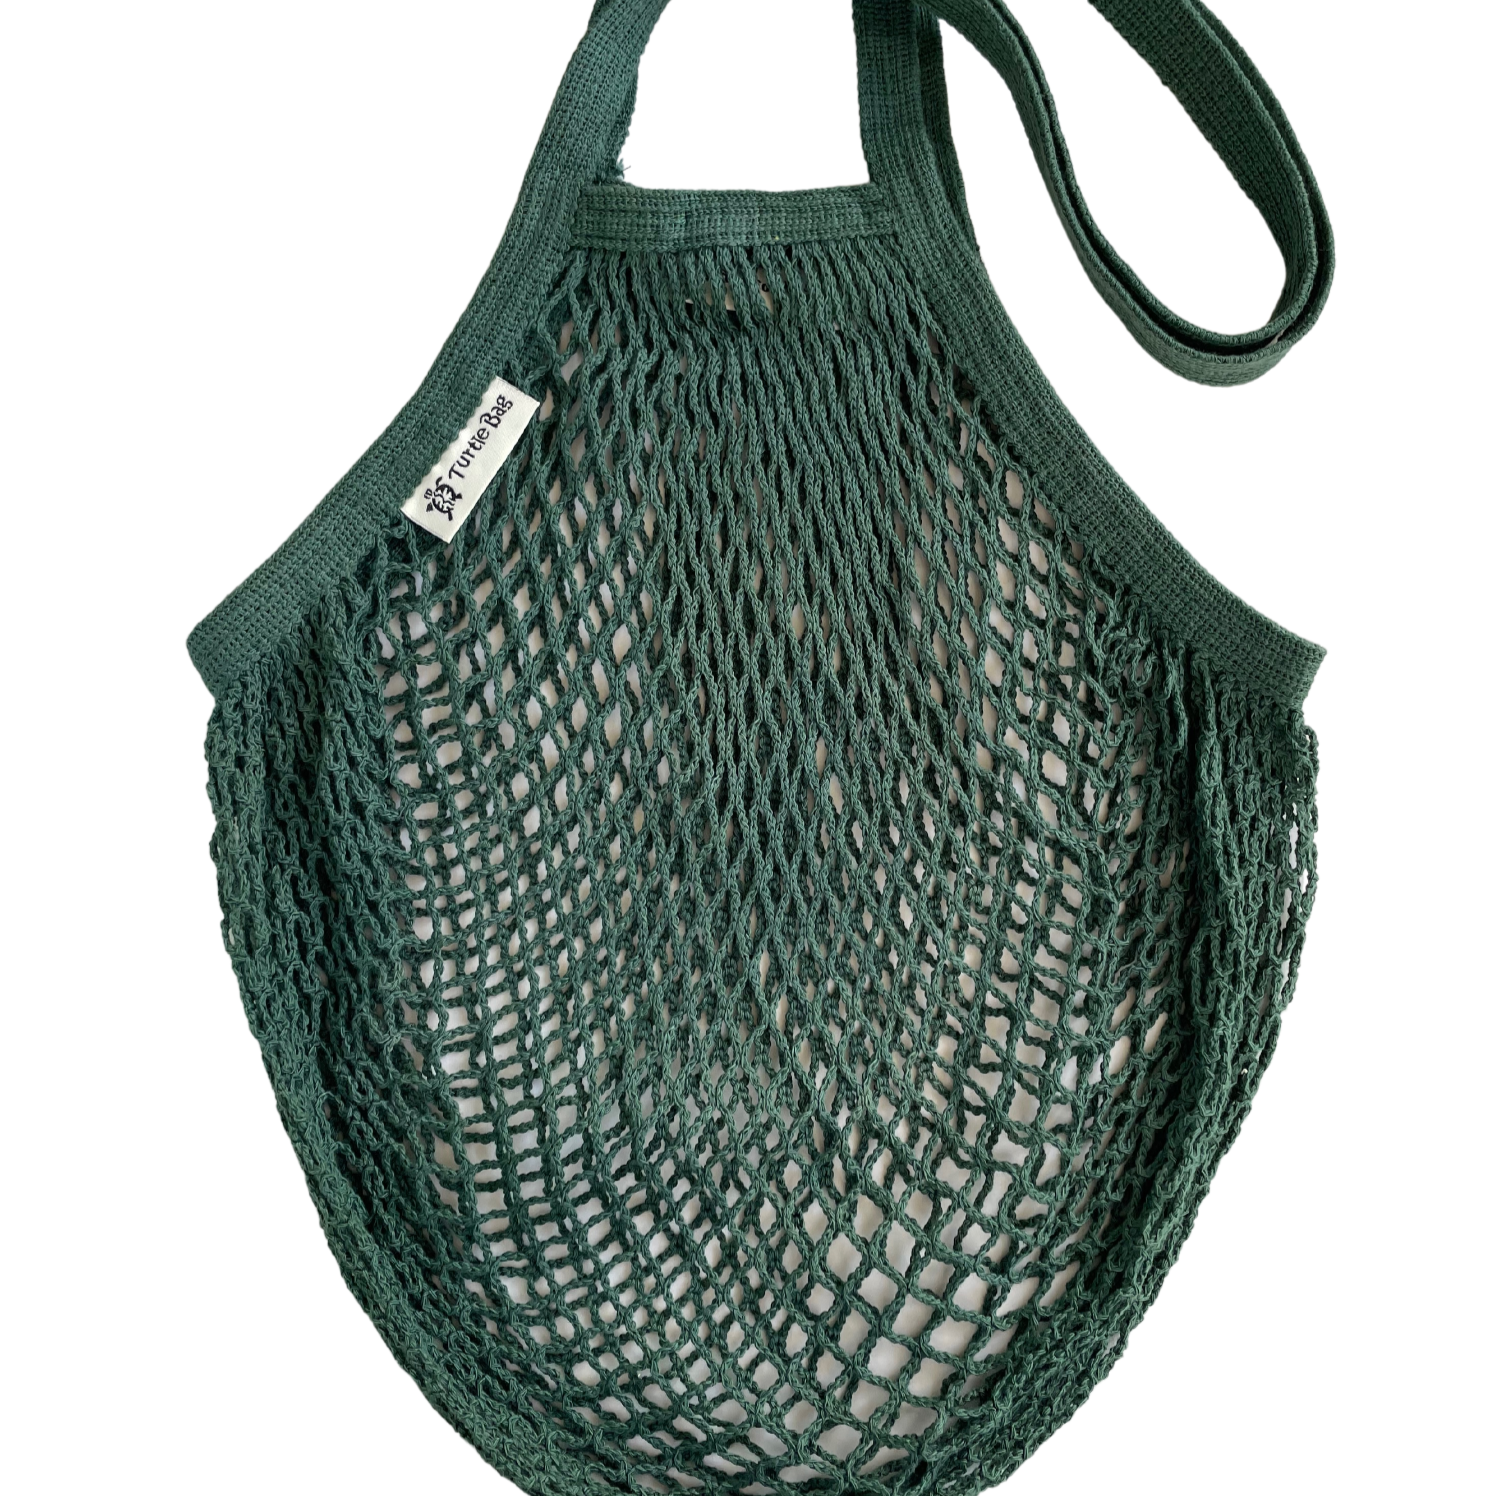 Long Handled Organic Cotton String Bag - bottle green